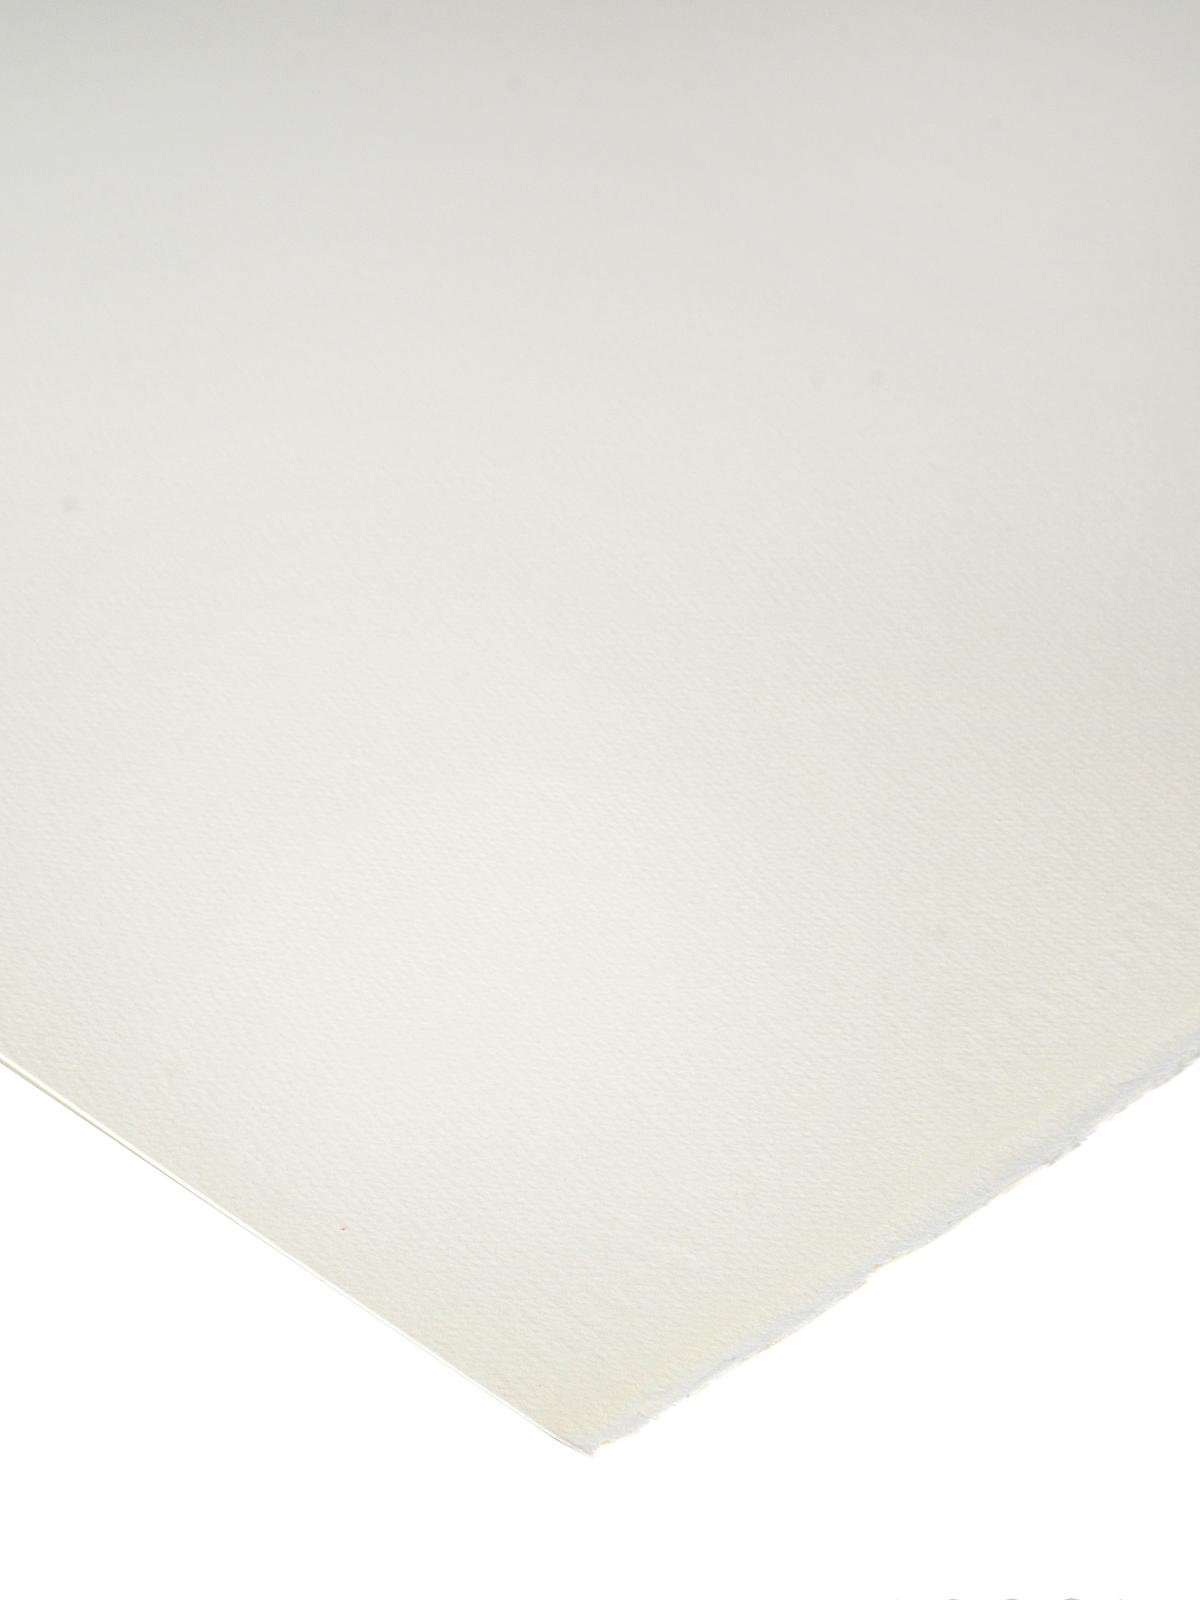 Artistico Watercolor Paper Extra White 300 Gsm Soft Press 22 In. X 30 In.